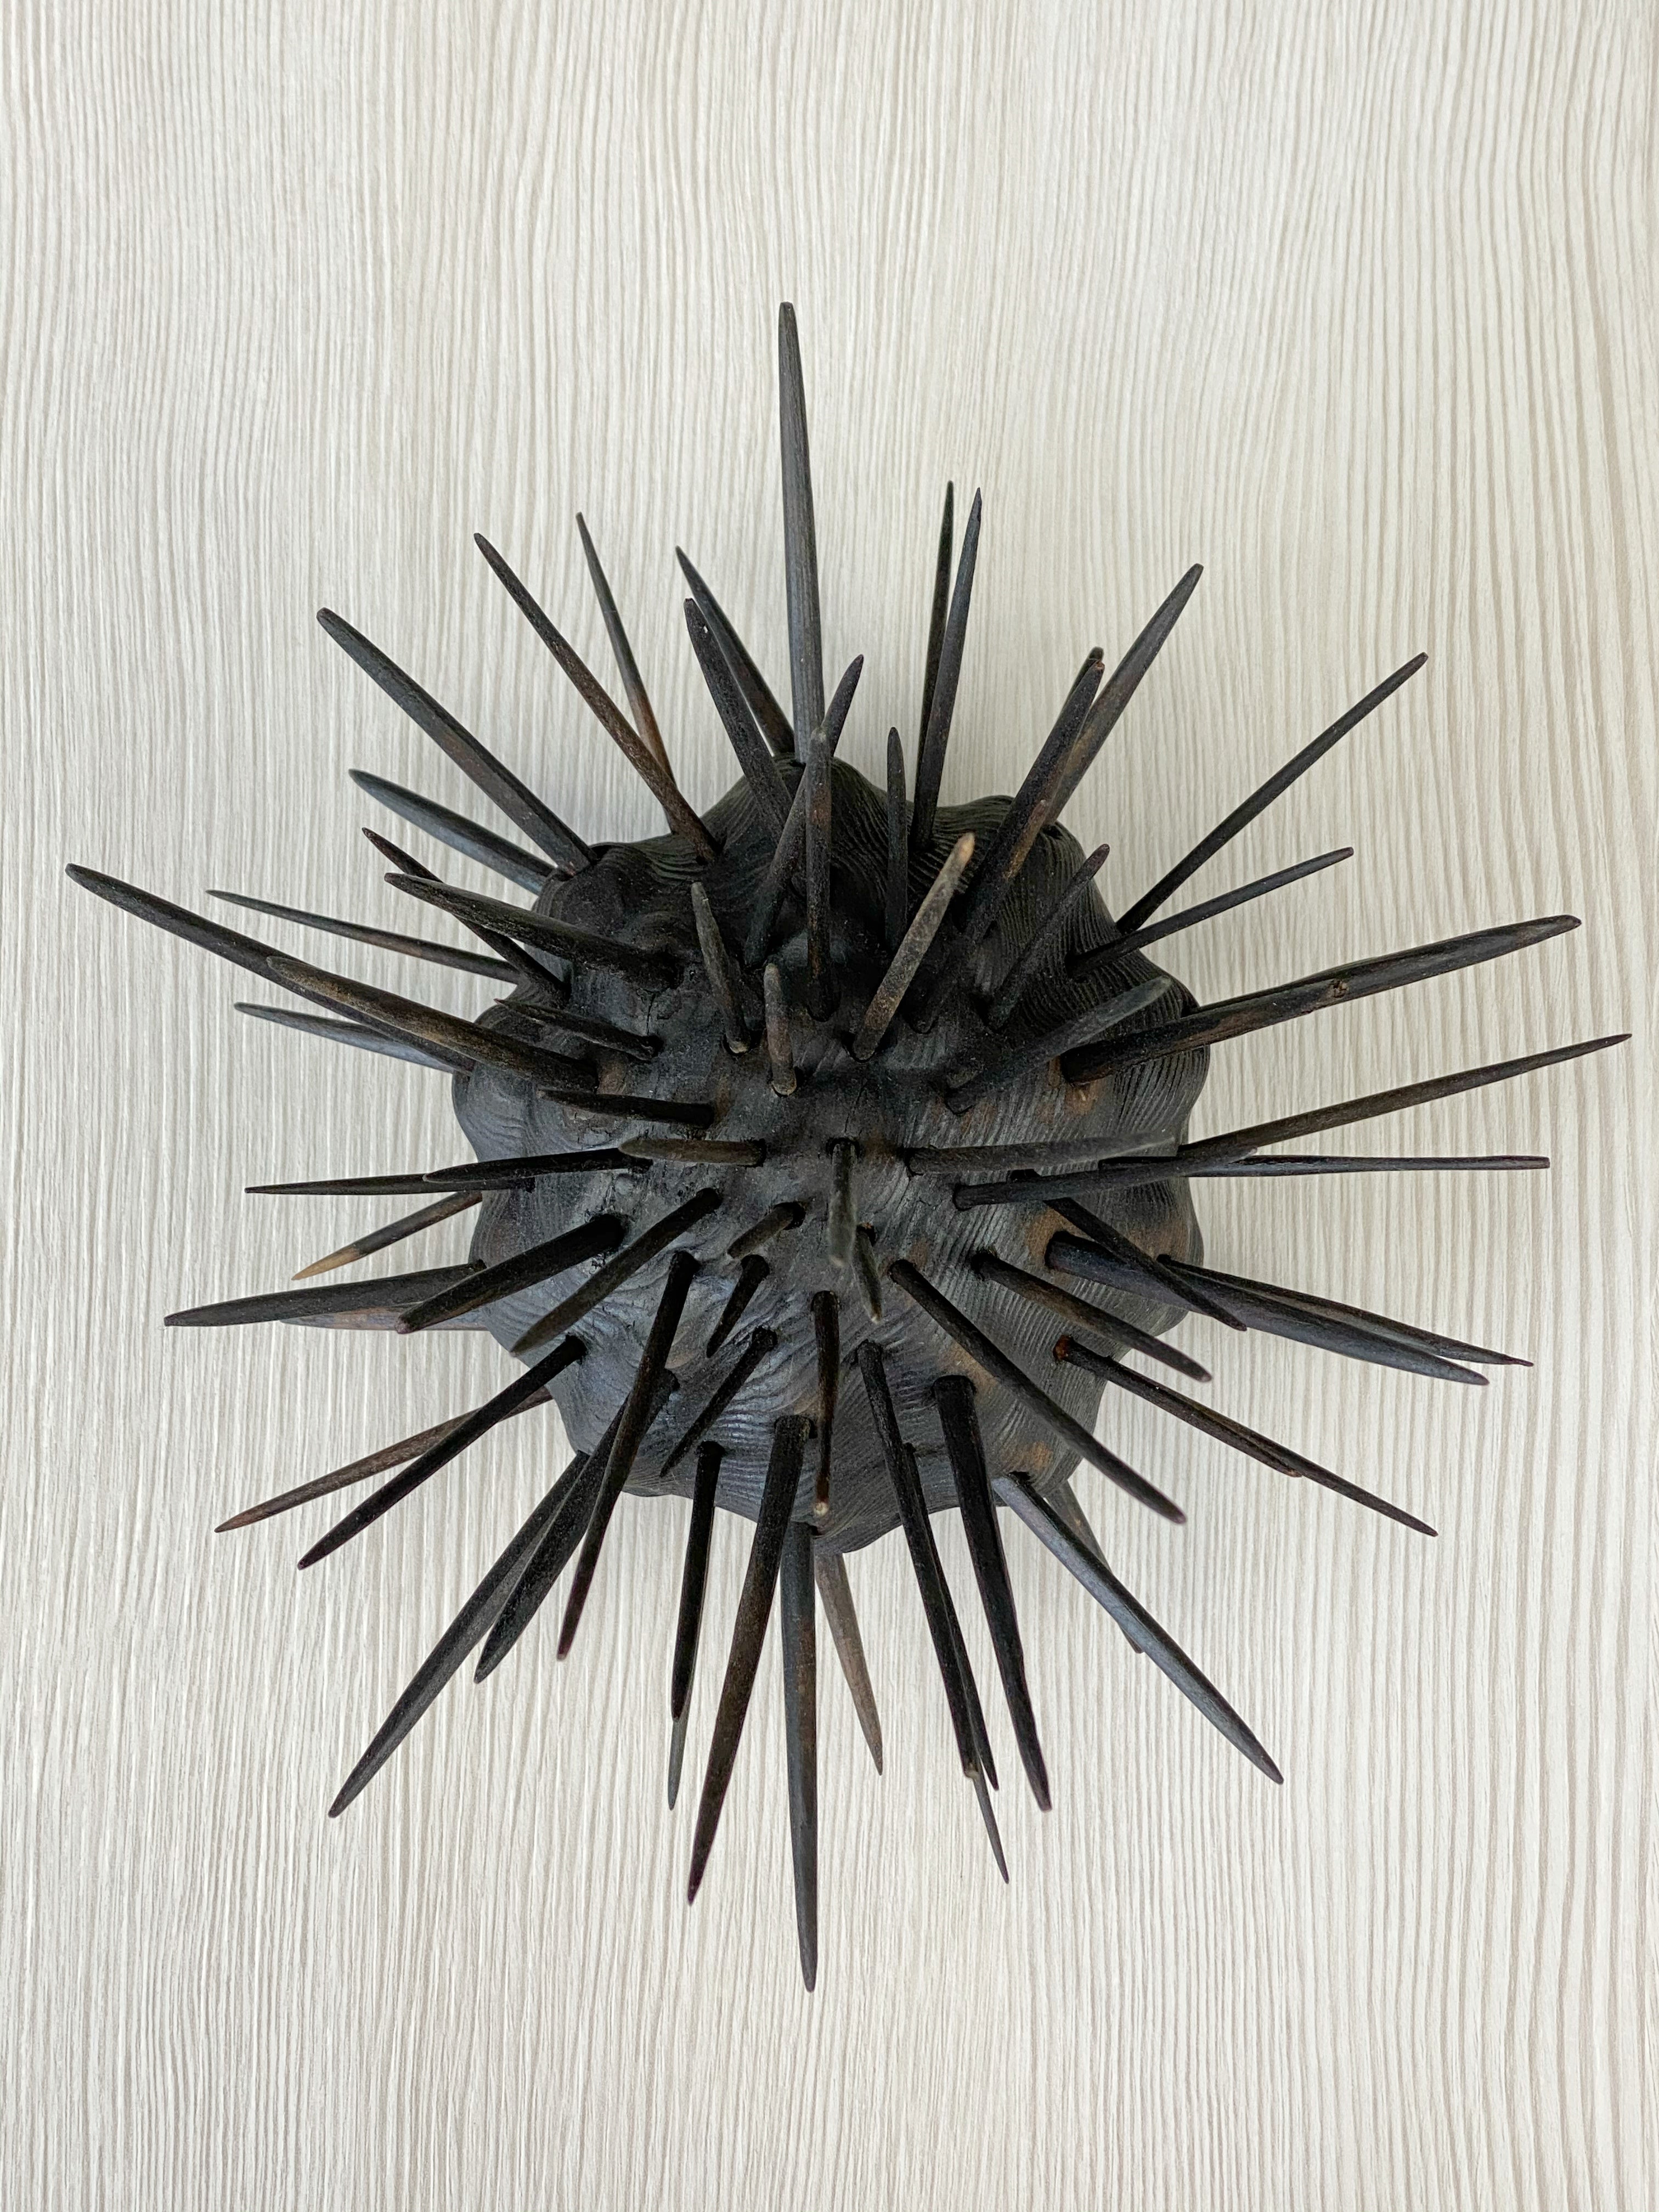 Andrew Vallee • Sea Urchin, Black